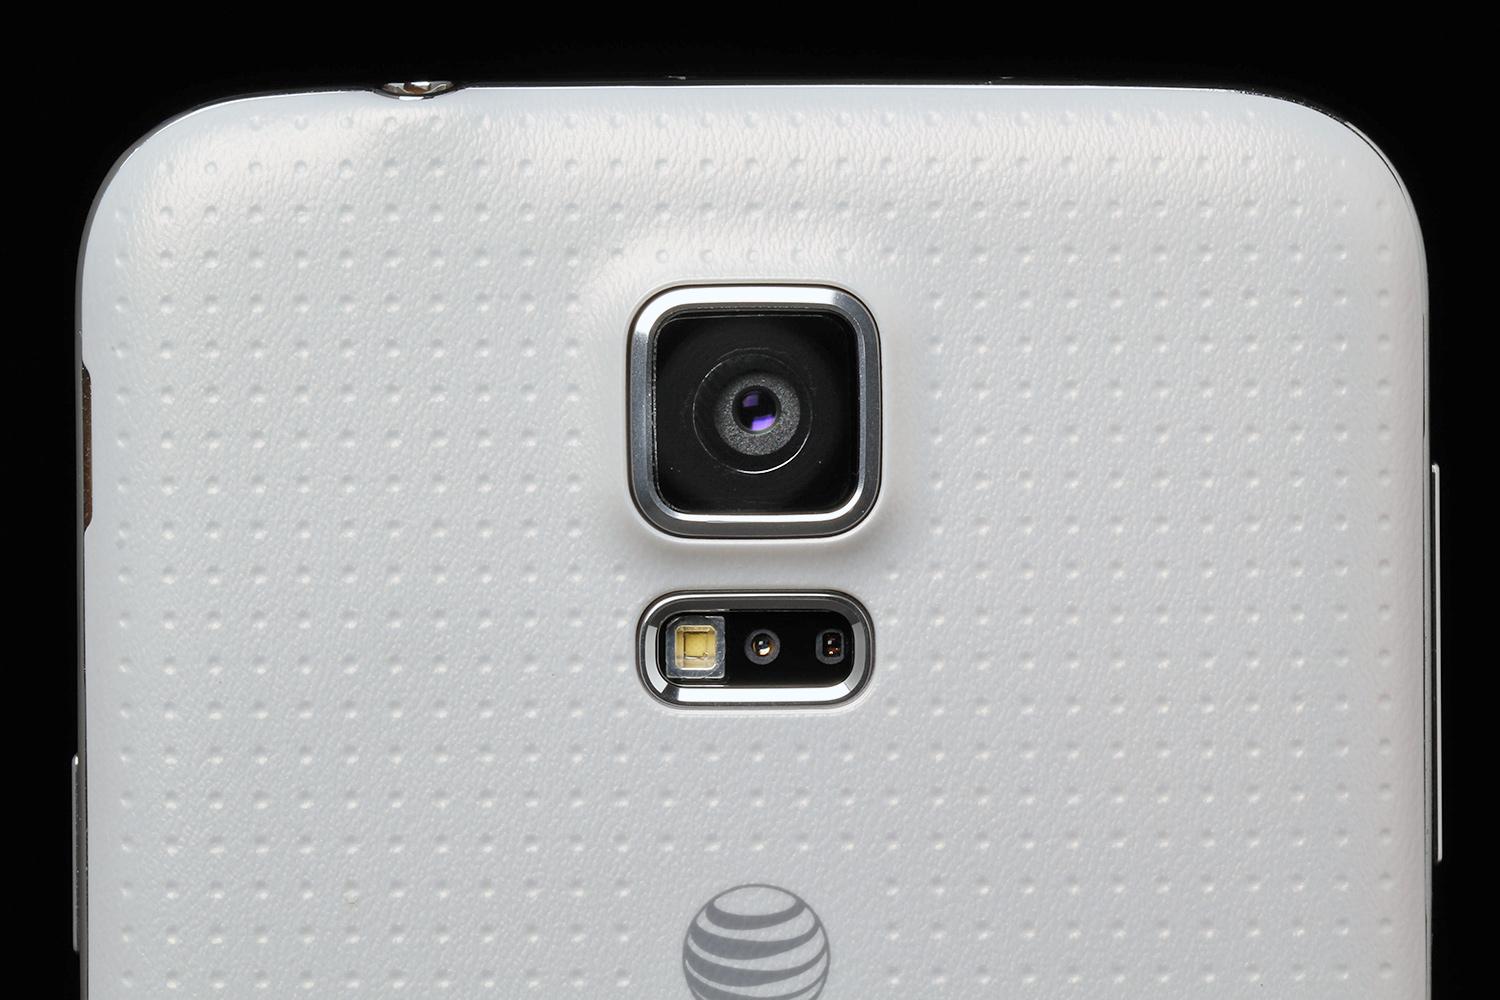 Samsung-Galaxy-S5-review-rear-camera-lens-macro-2.jpg